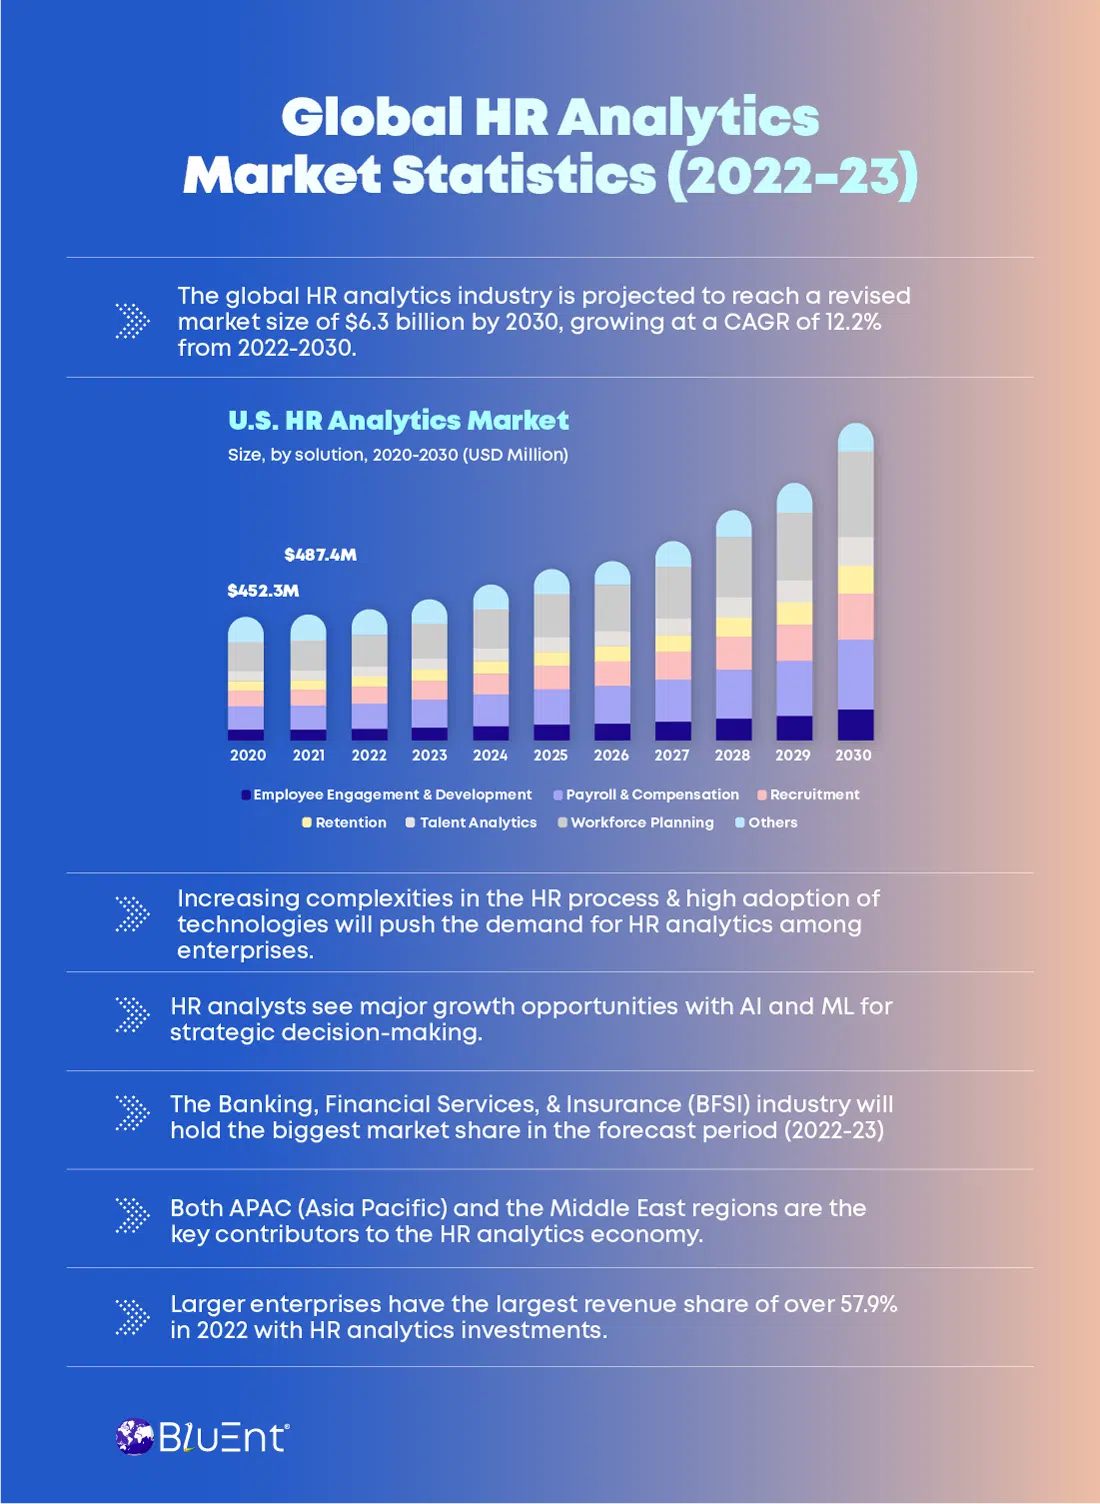 Latest statistics on the global HR analytics market